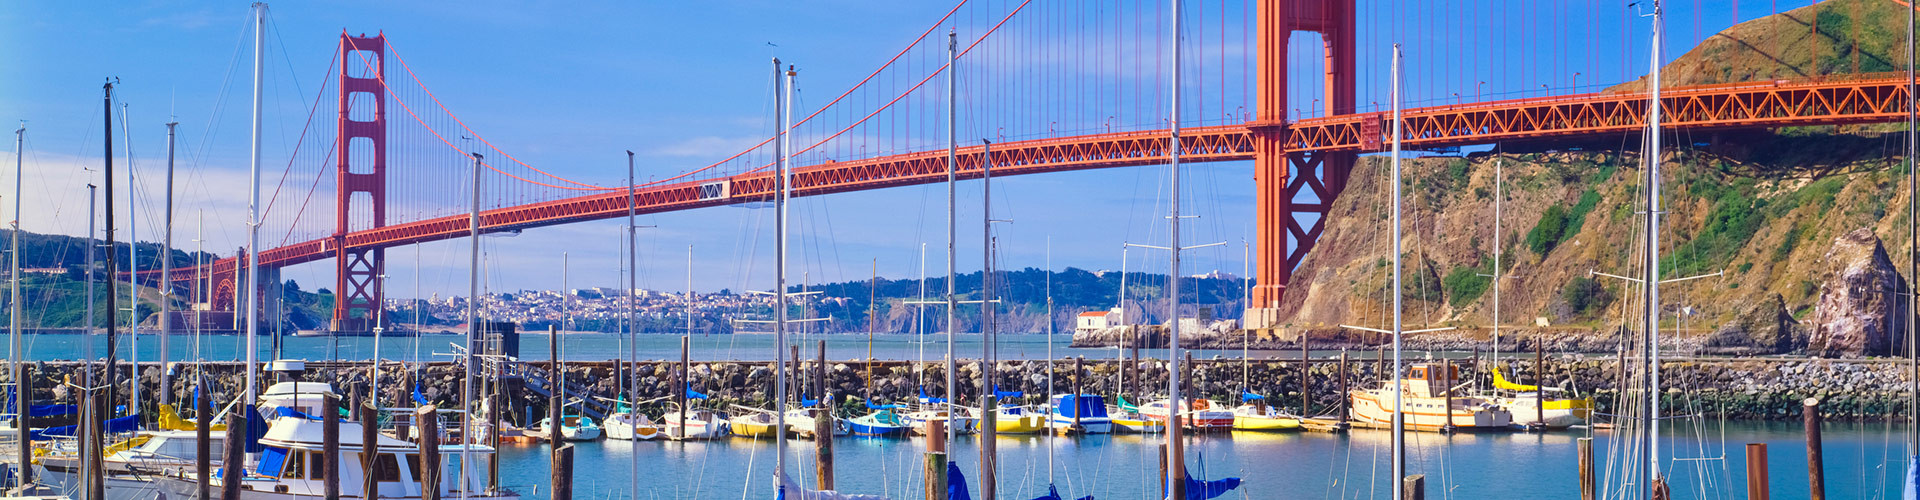 Golden Gate Bridge and sailboats